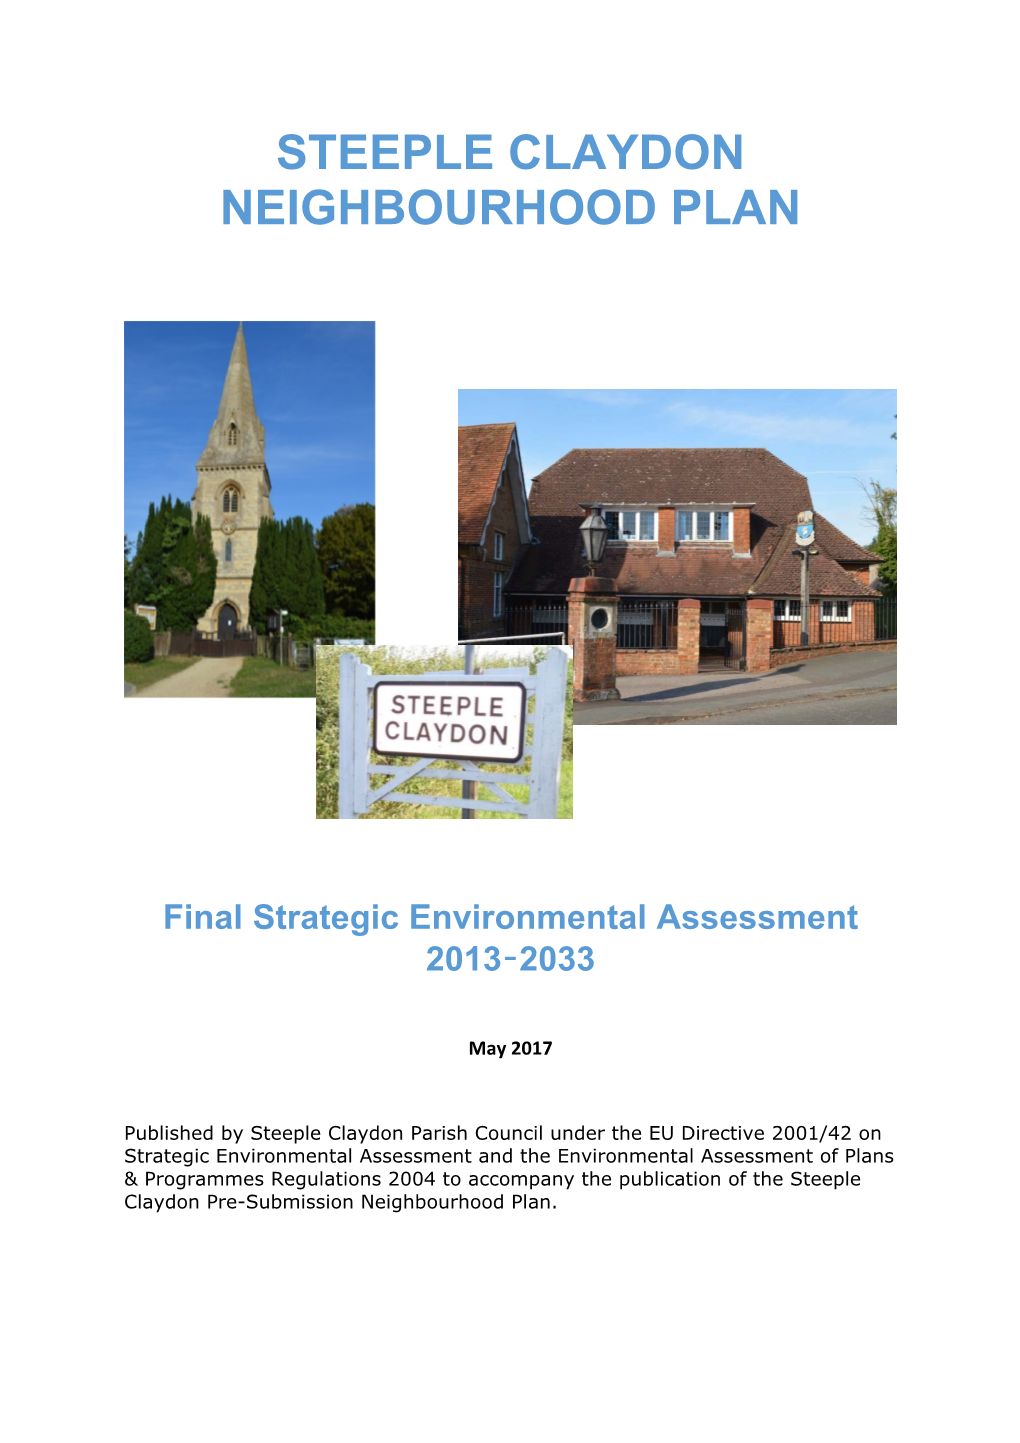 Steeple Claydon Neighbourhood Plan Strategic Environmental Assessment